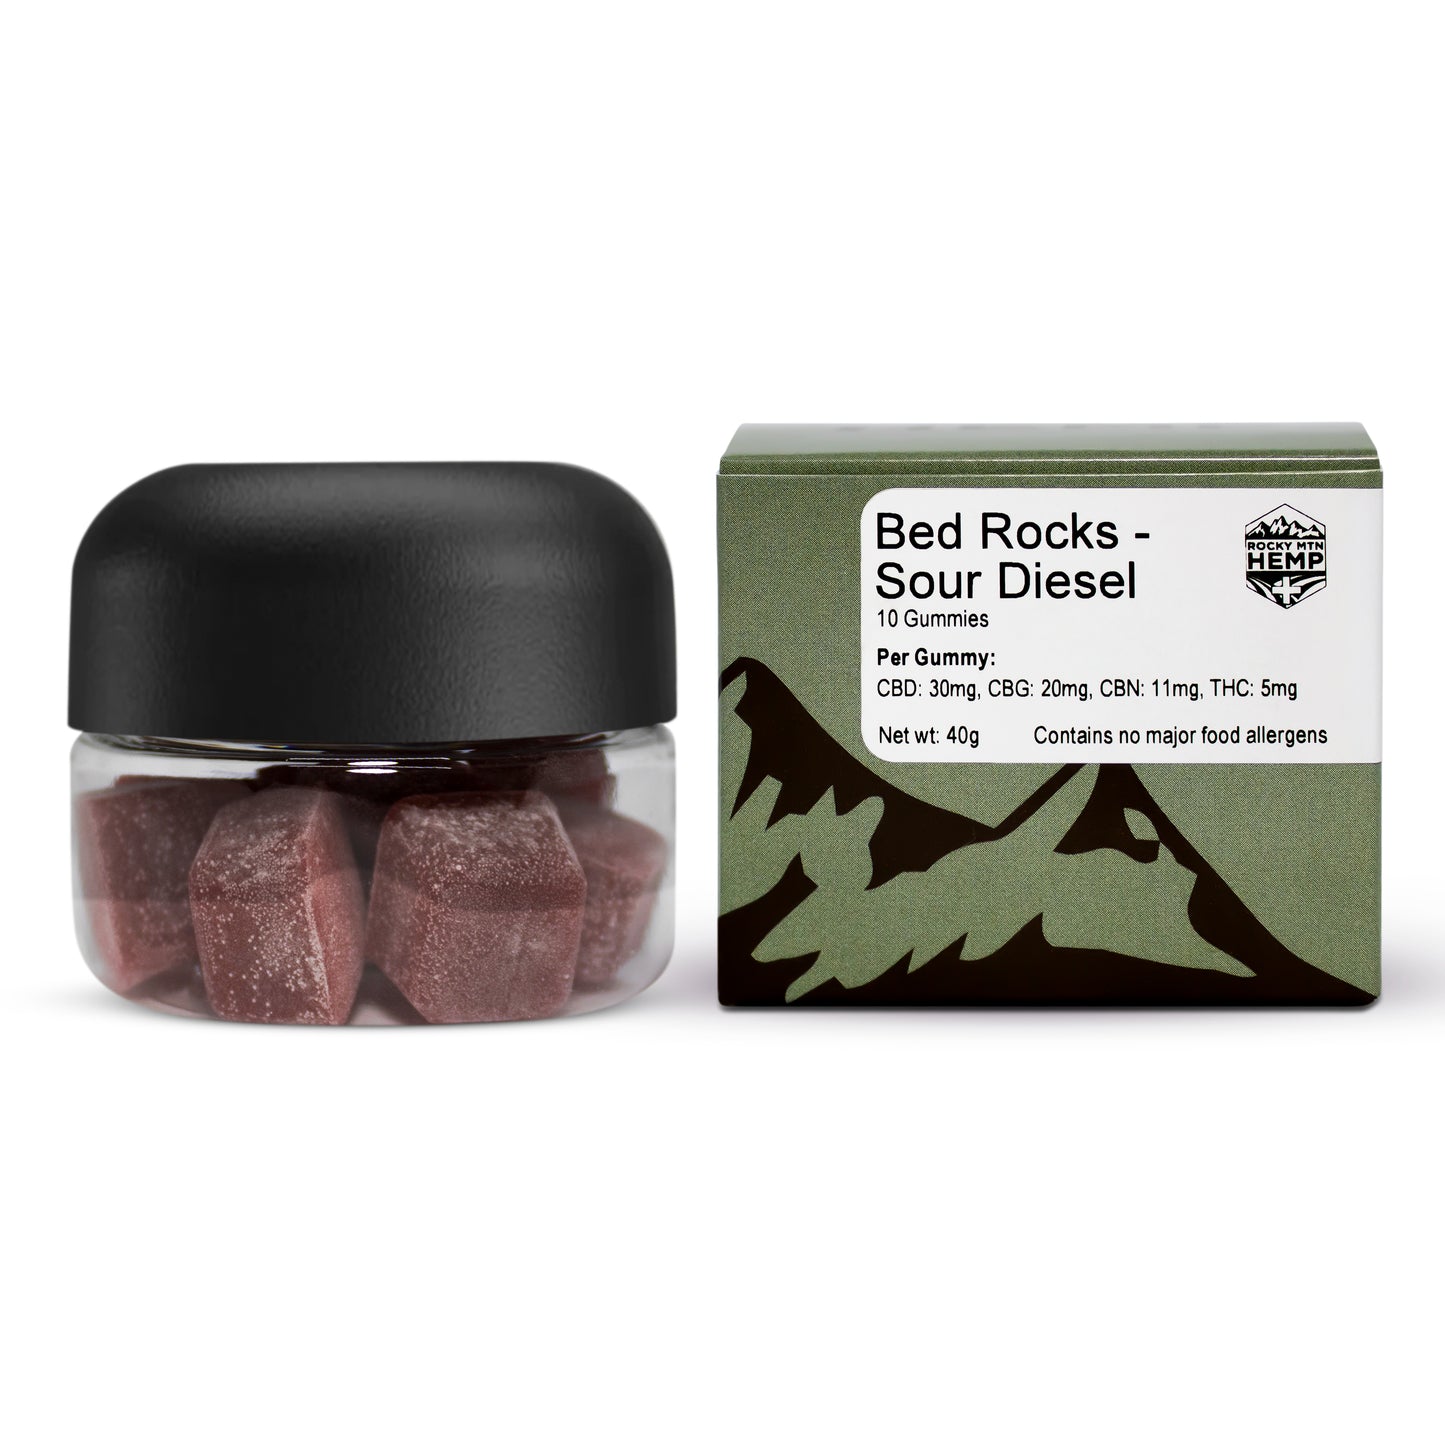 Bed Rocks – Sour Diesel 10 gummies CBN: 11 mg, CBD: 30 mg, THC: 5 mg